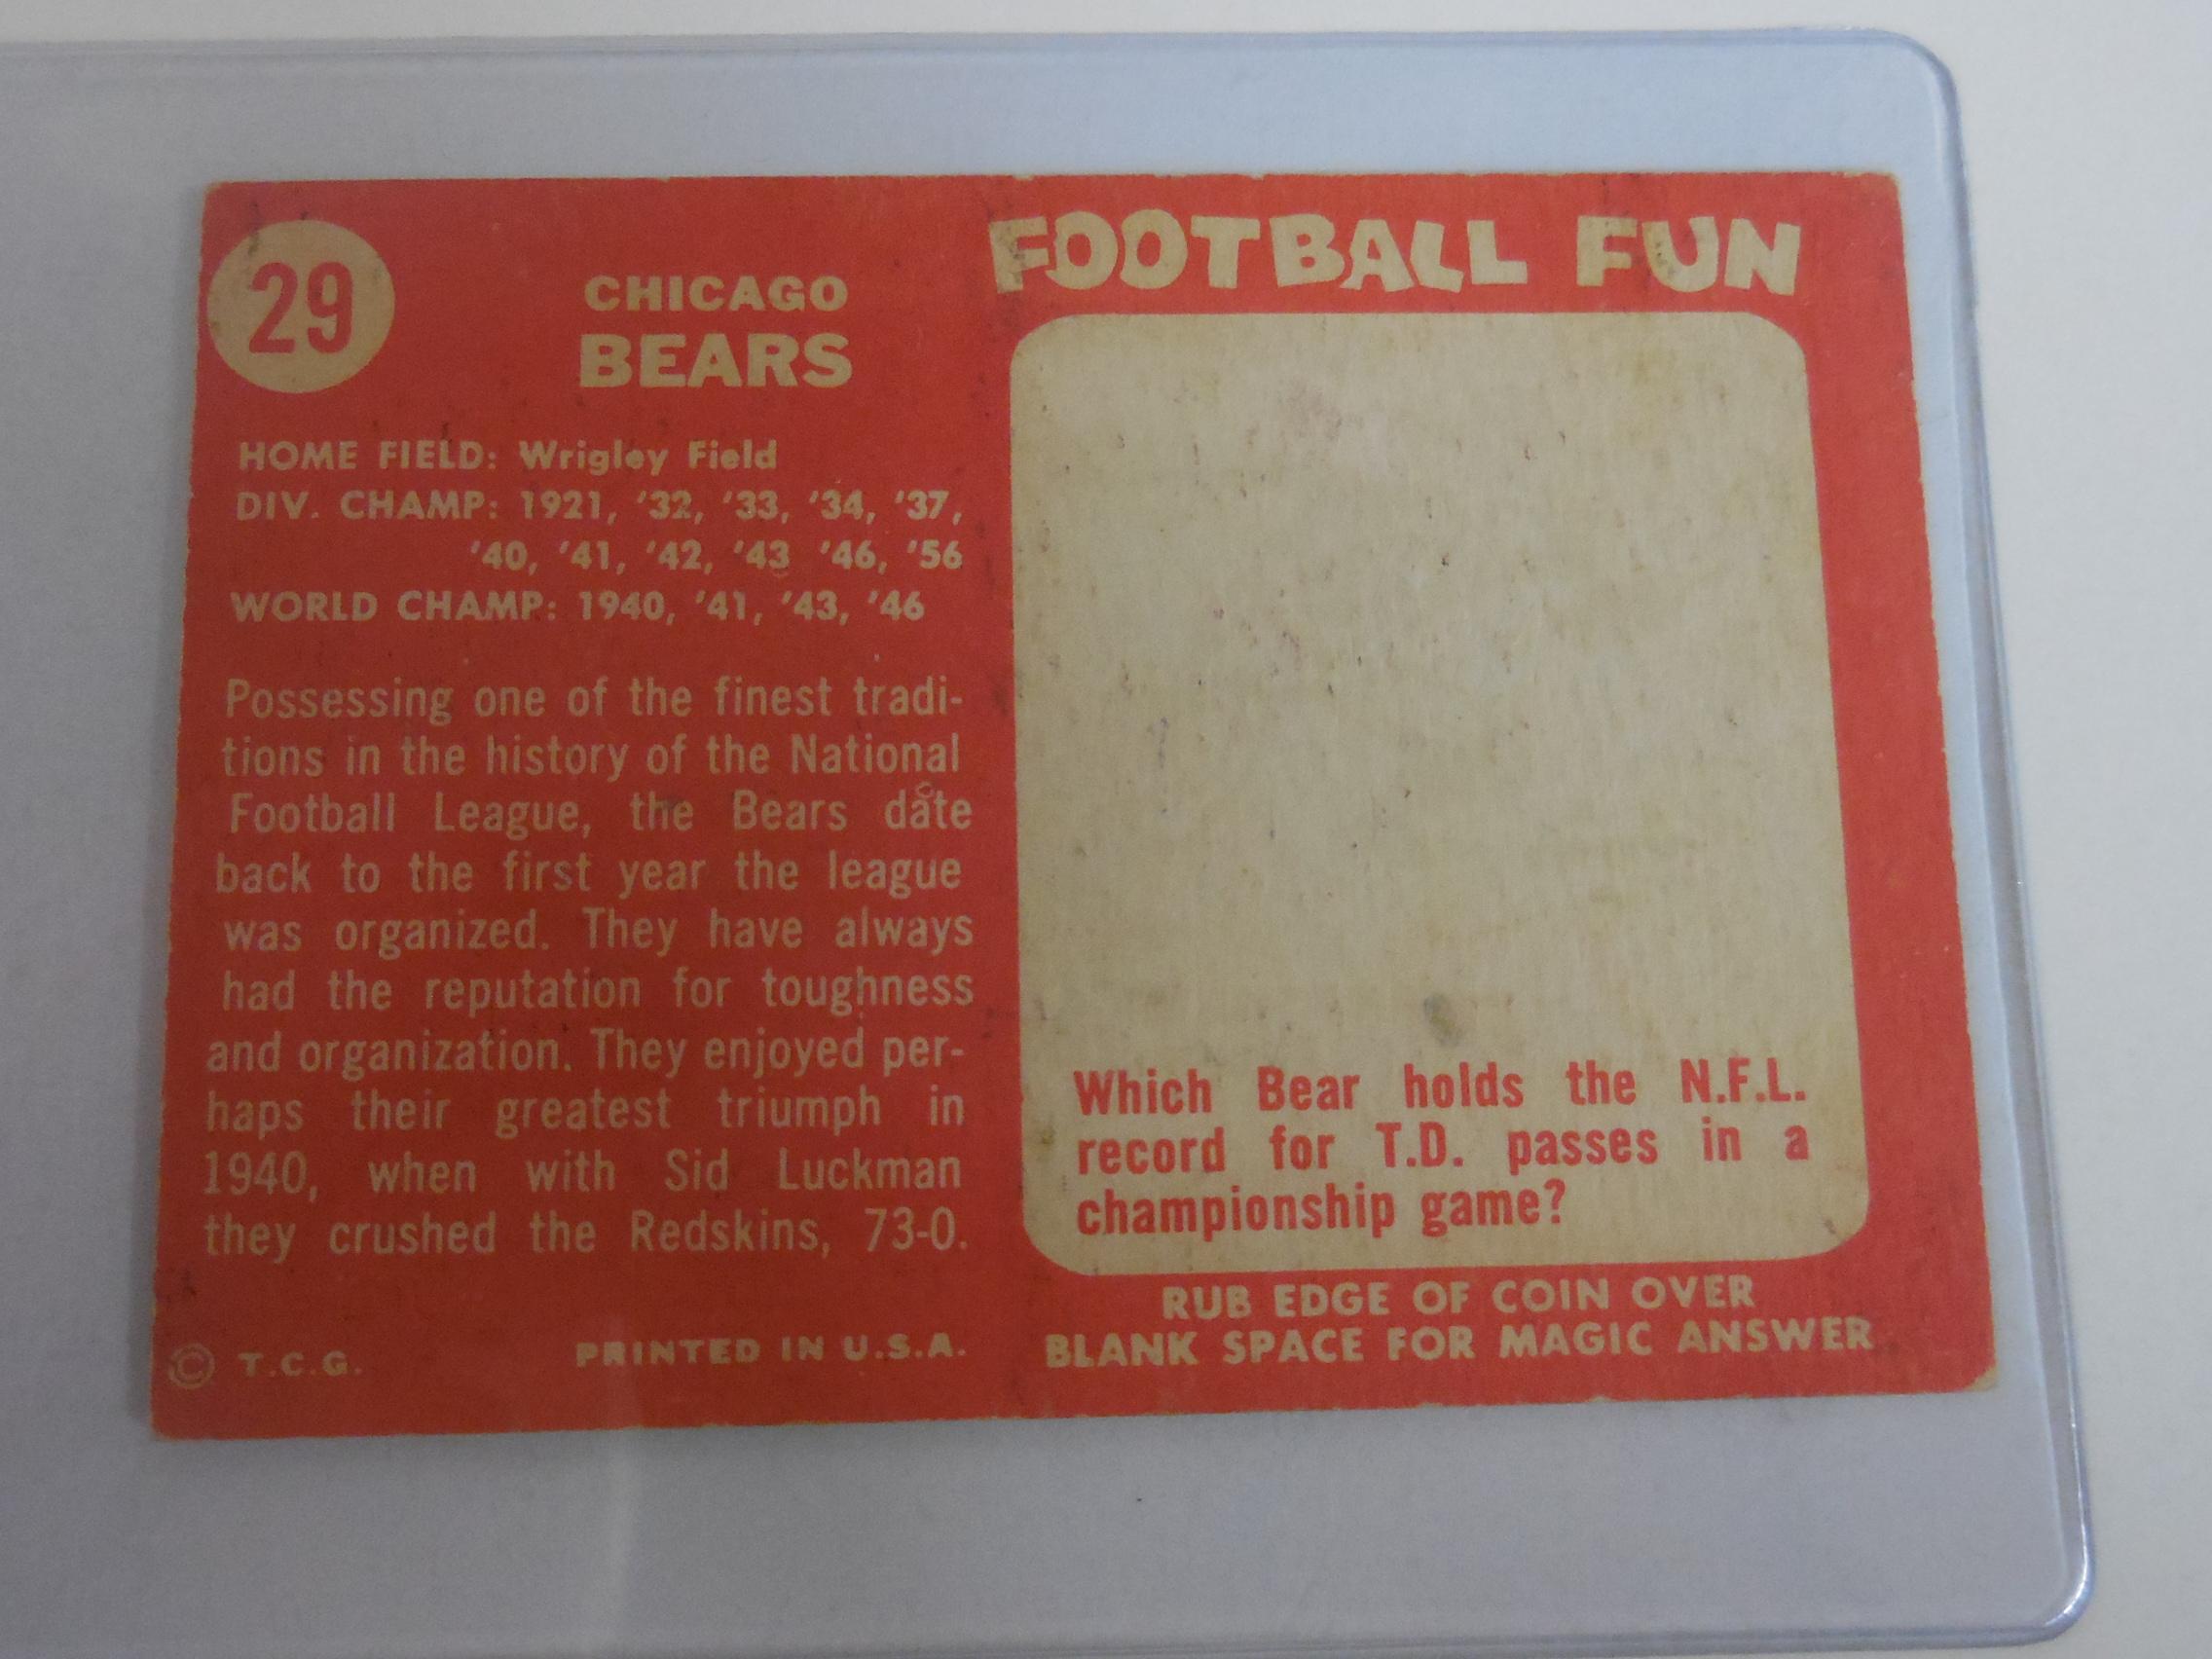 1958 TOPPS FOOTBALL #29 CHICAGO BEARS TEAM CARD VINTAGE